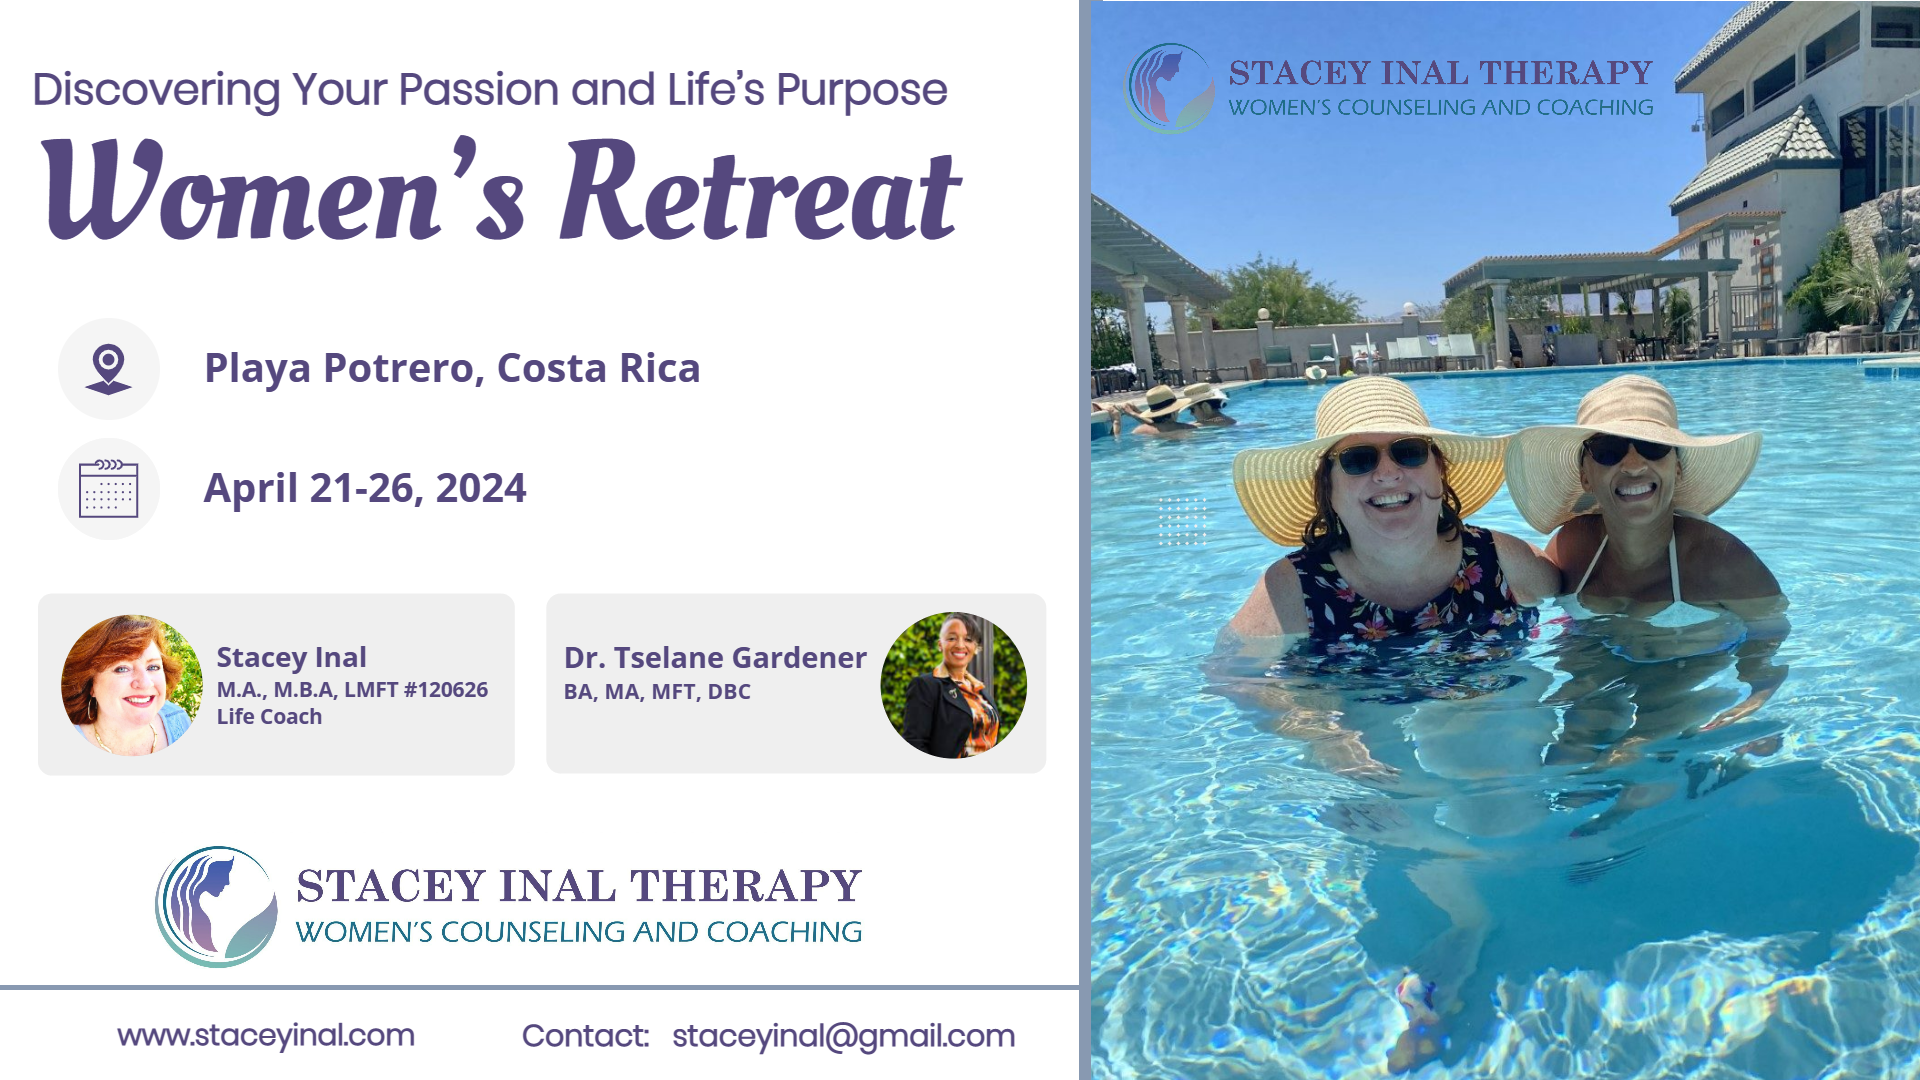 Women's Retreat - April 2024 - Playa Potrero, Costa Rica - Stacey Inal